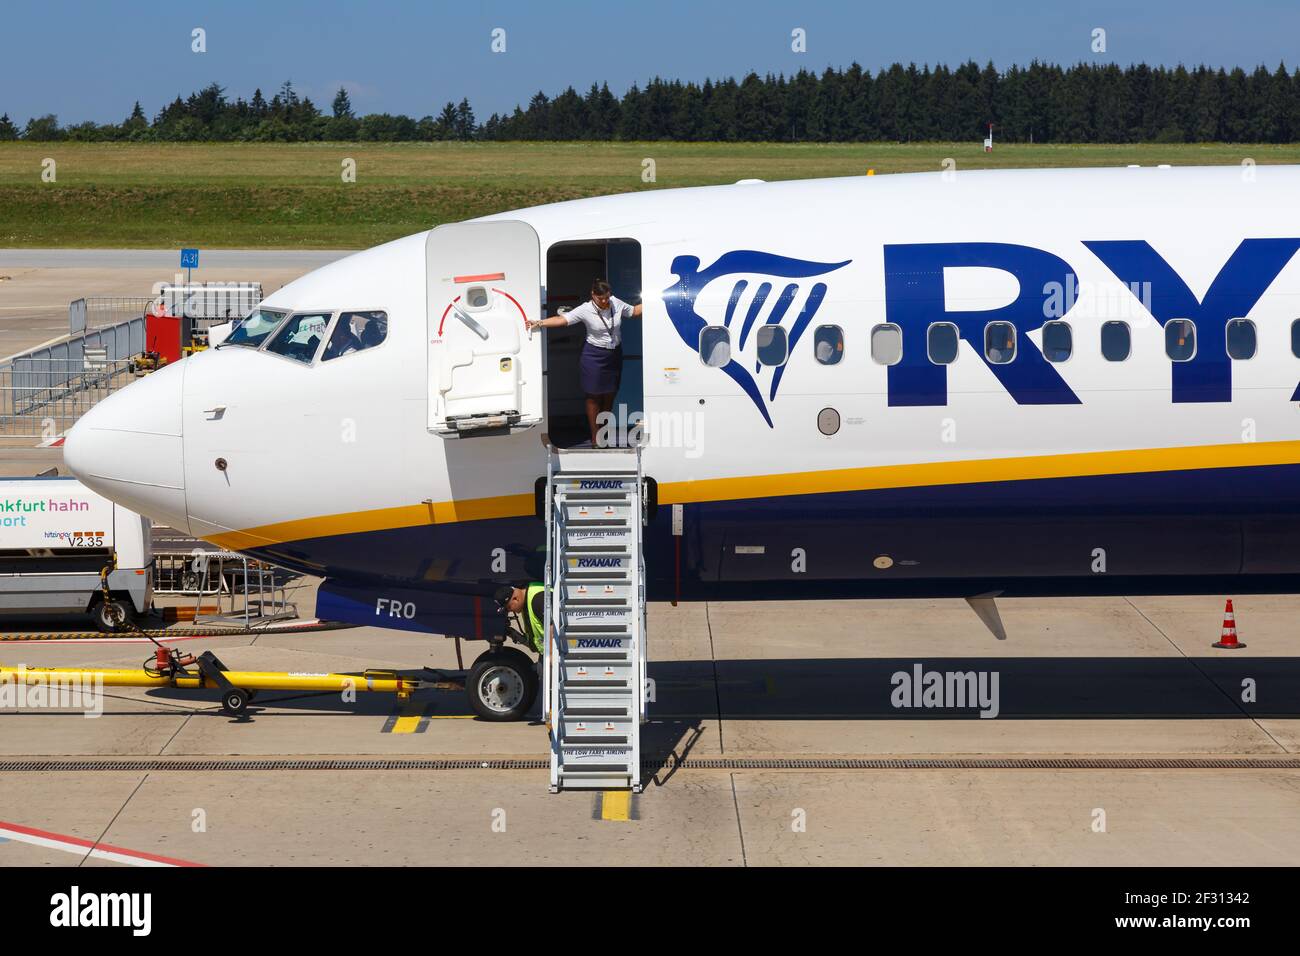 Lautzenhausen, Germany - July 27, 2018: Ryanair Boeing B737-800 airplane at Frankfurt Hahn Airport in Germany. Boeing is an American aircraft manufact Stock Photo